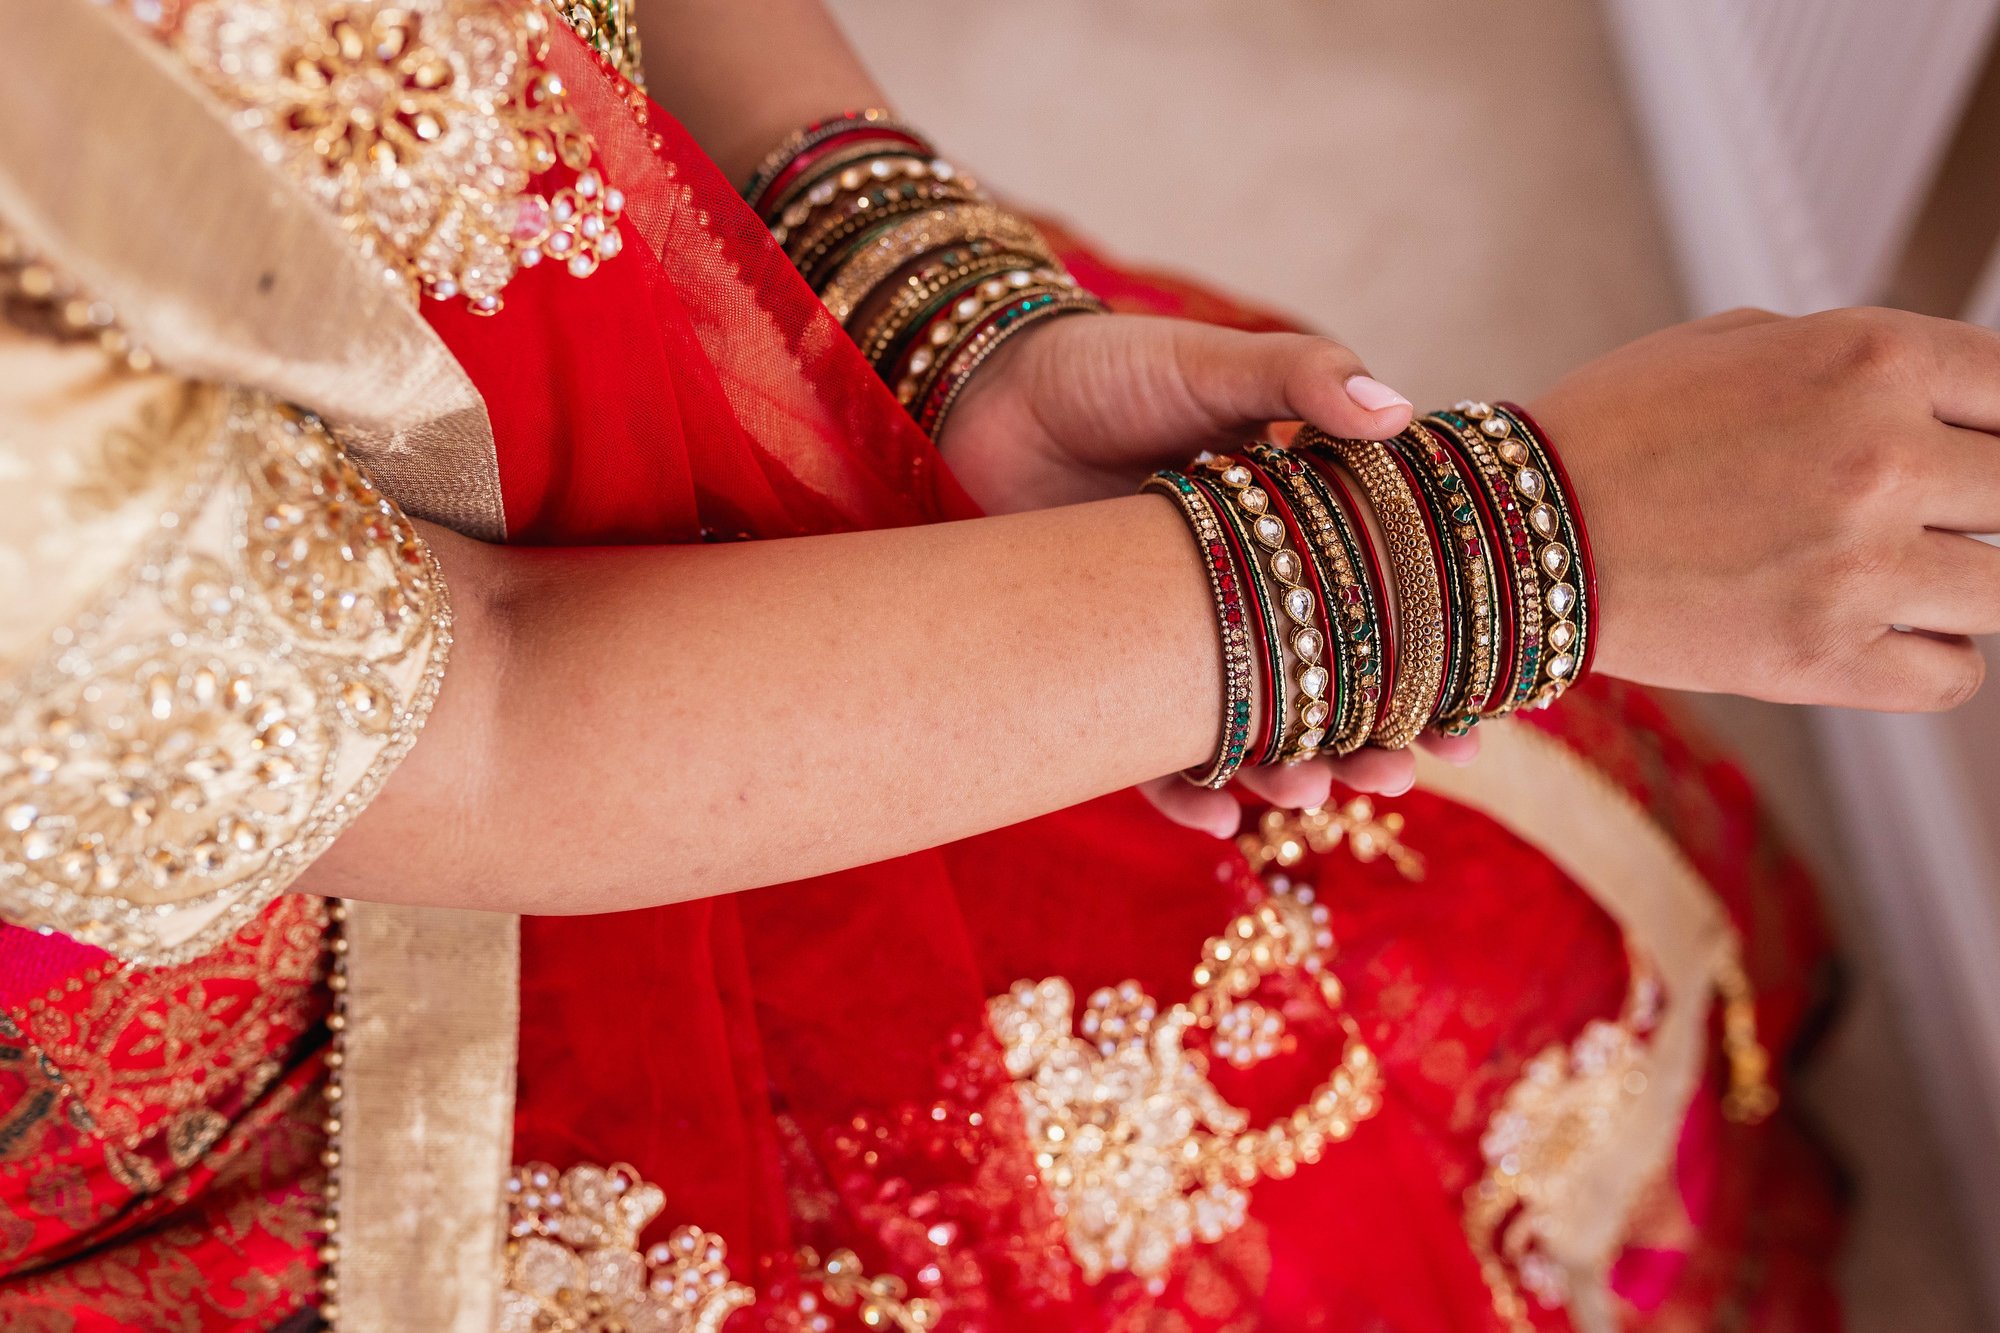 Hindu wedding, Gujarati wedding, Asian wedding photographer, Leicester, Intimate wedding, bride getting ready